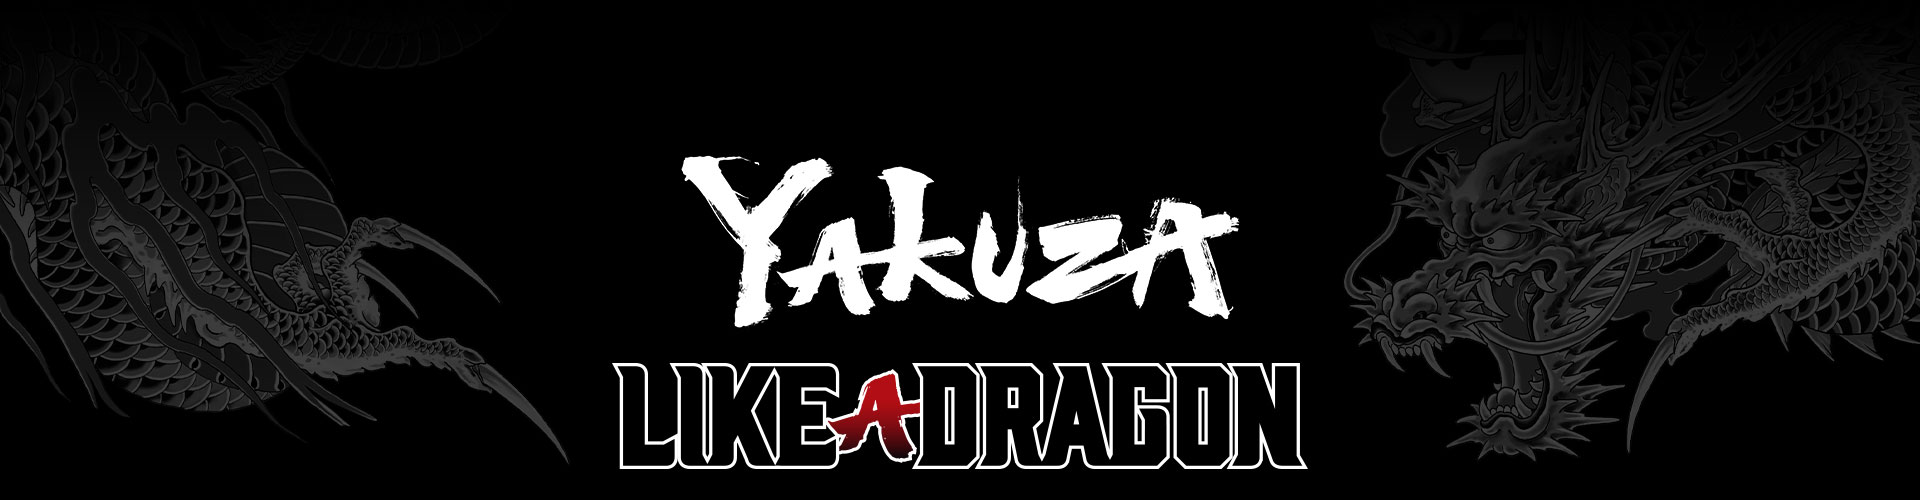 Yakuza Like a Dragon franchise logo with a stylized grey dragon tattoo background.